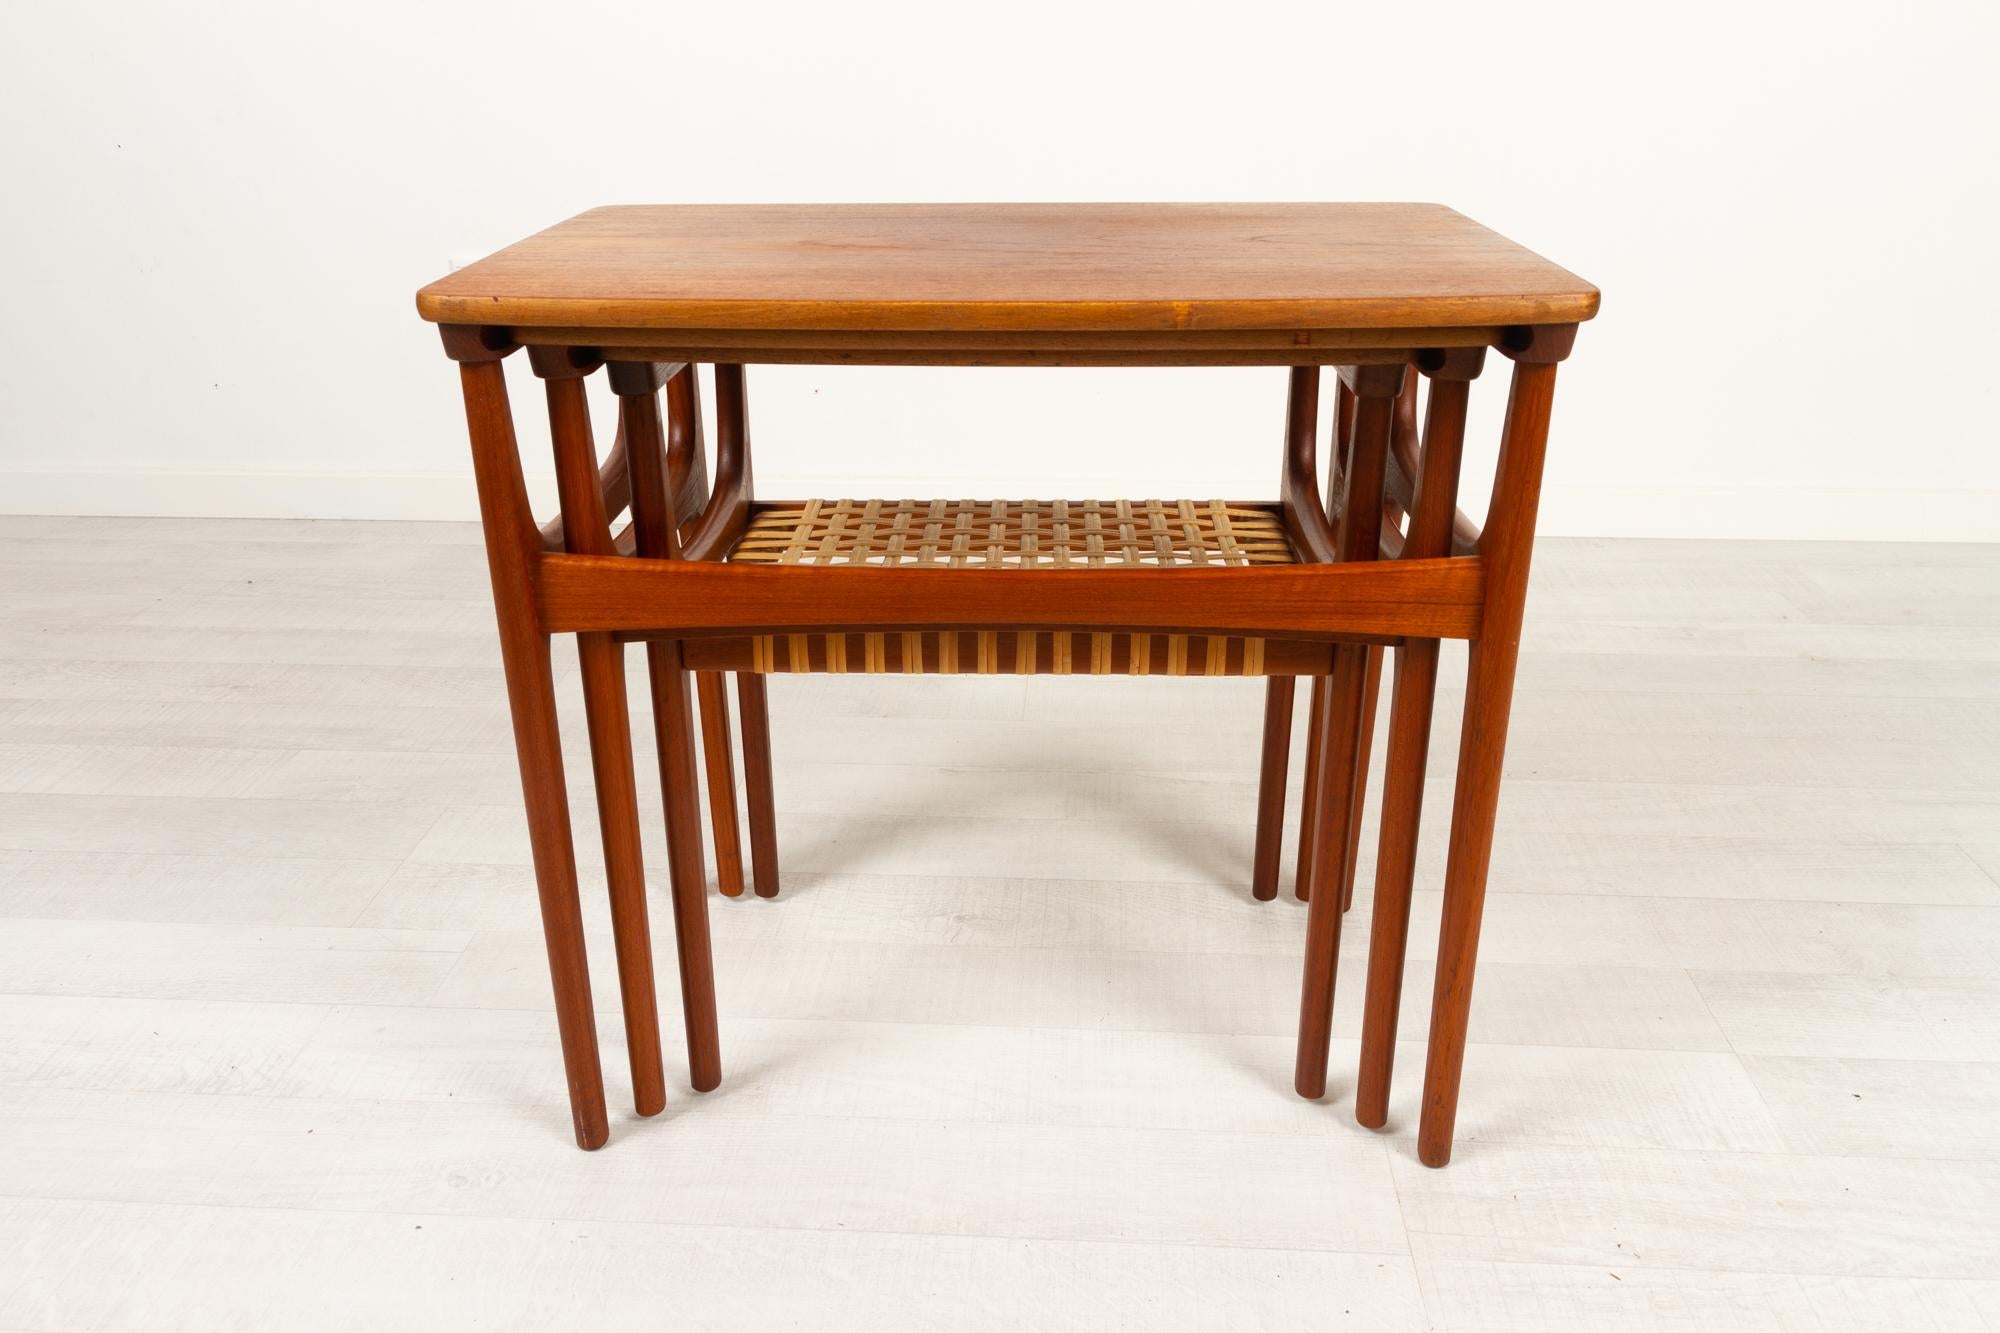 Mid-20th Century Vintage Danish Teak Nesting Tables by Erling Torvits for Heltborg Møbler 1950s For Sale